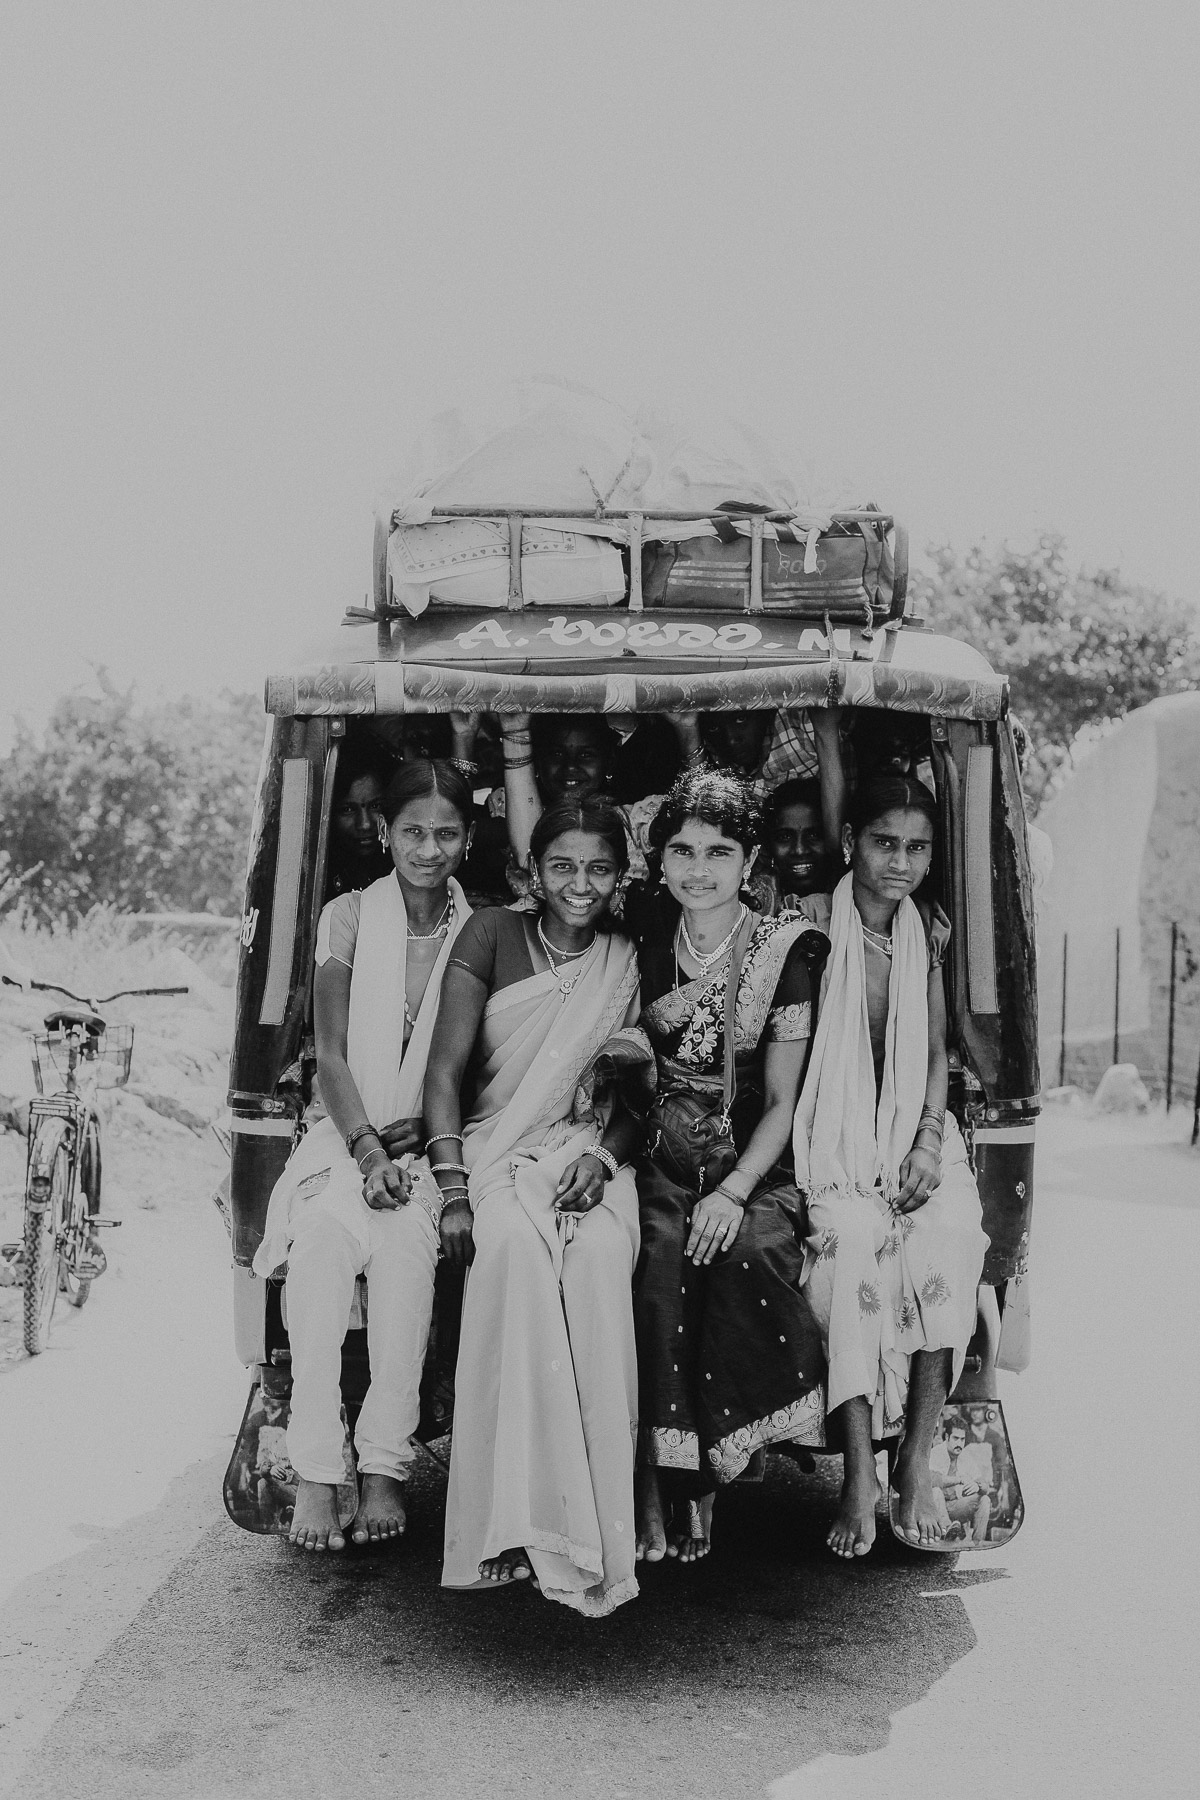 documentary-travel-photographer-ireland-katie-farrell-cool-wedding-photographer-ireland-katie-farrell-photography-india-travel-photography-214